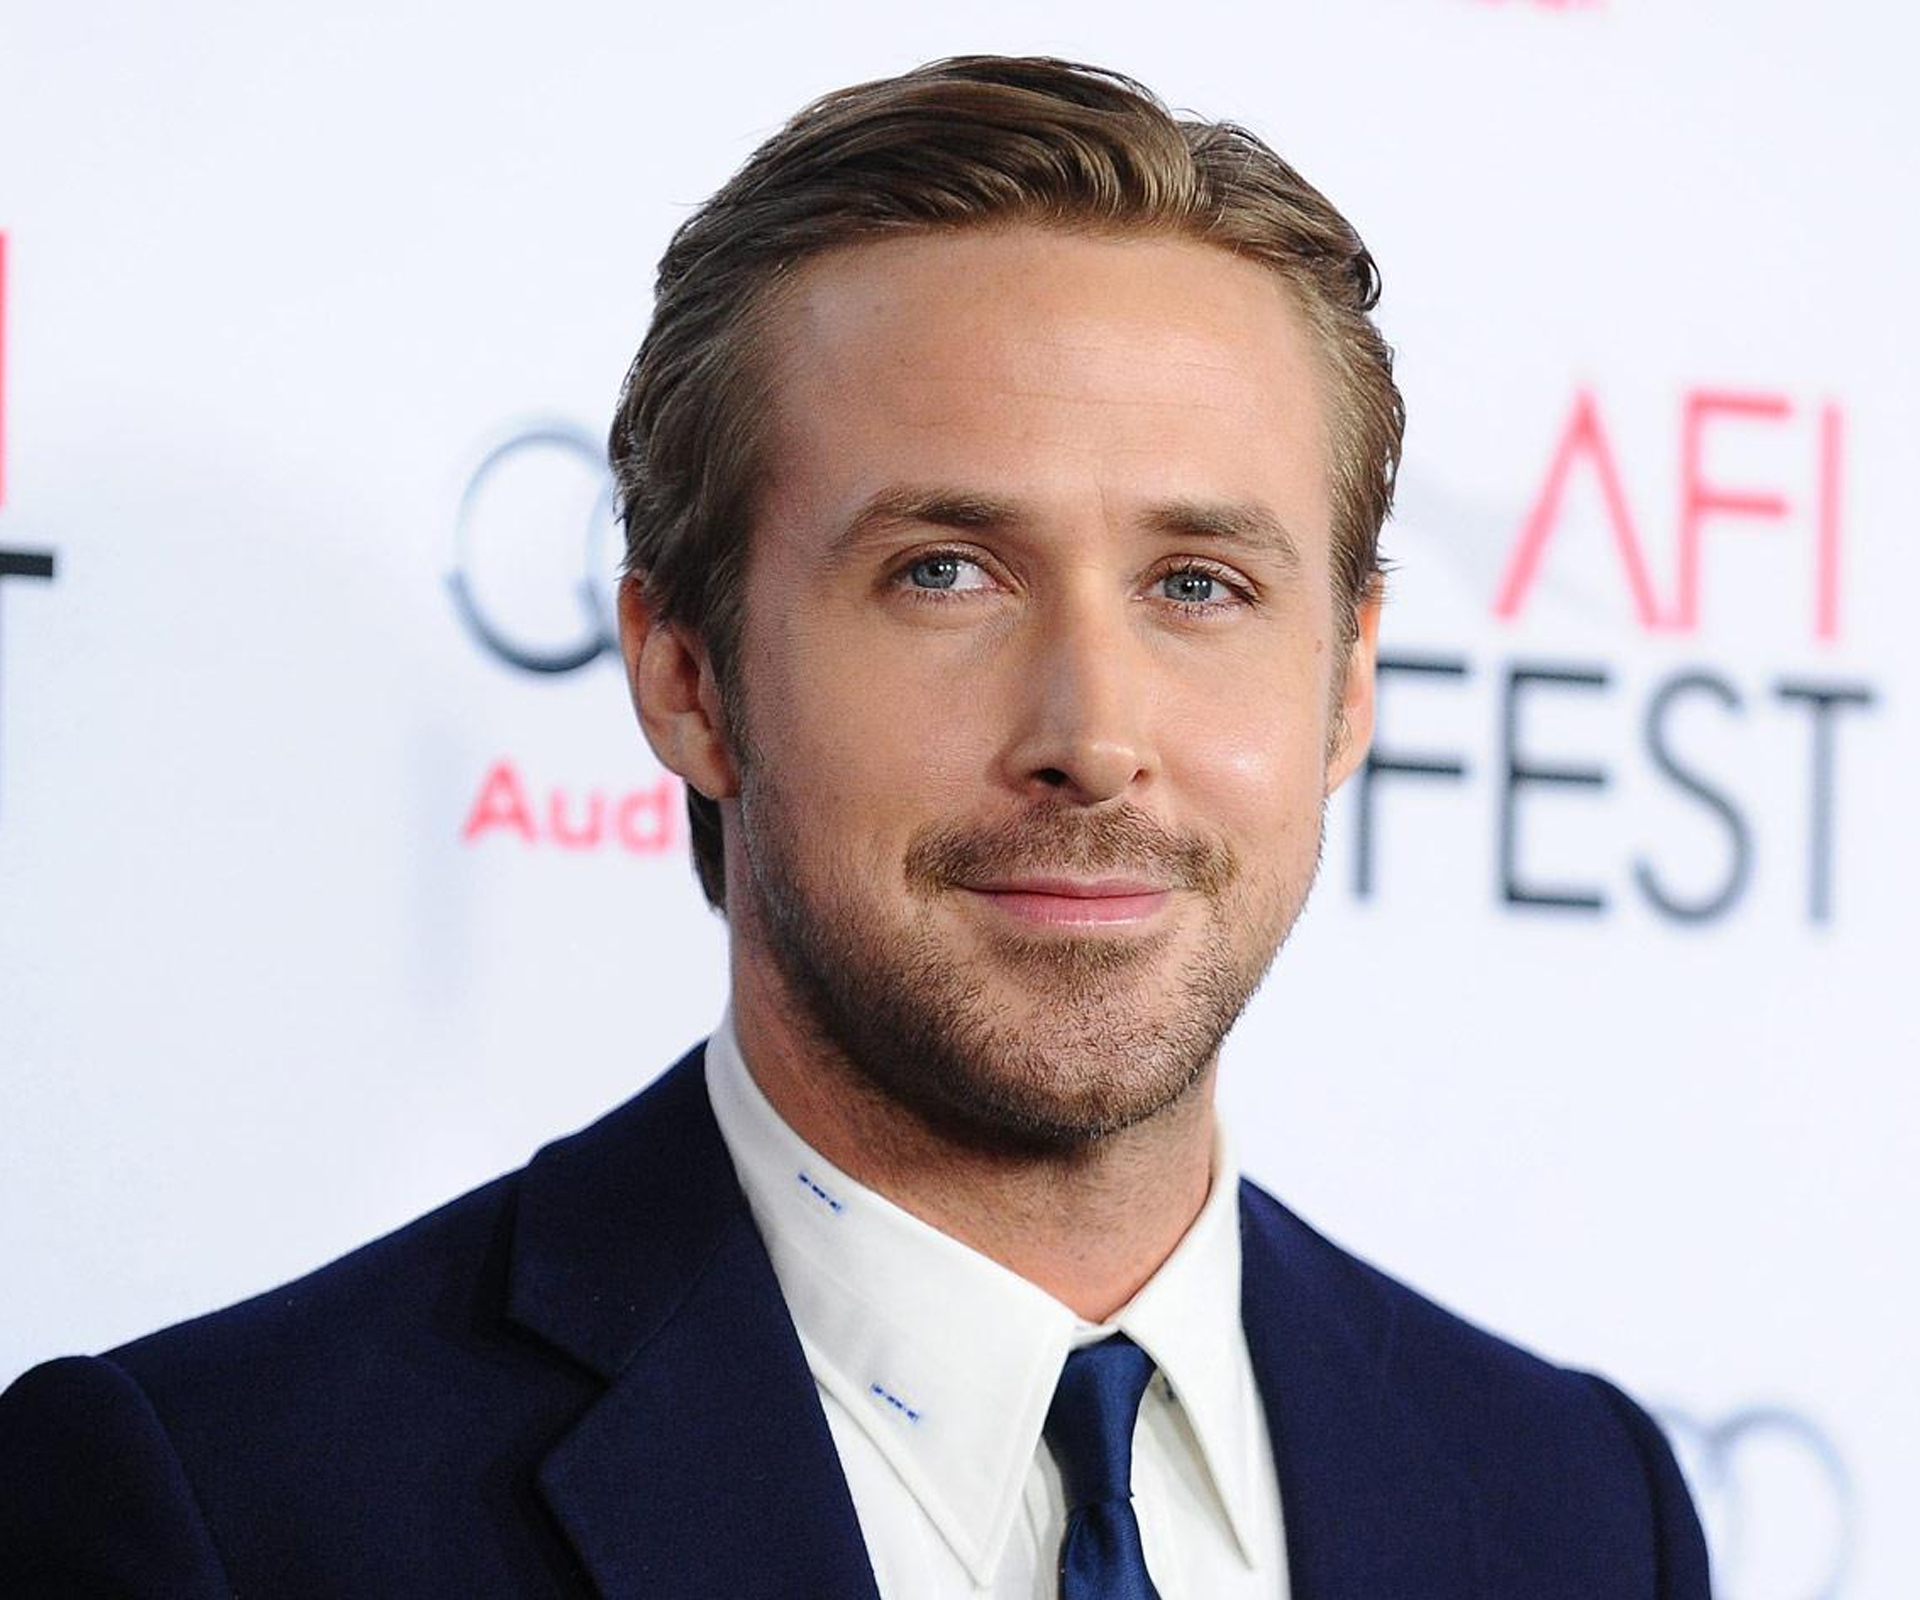 Actor Ryan Gosling has a new waxwork likeness